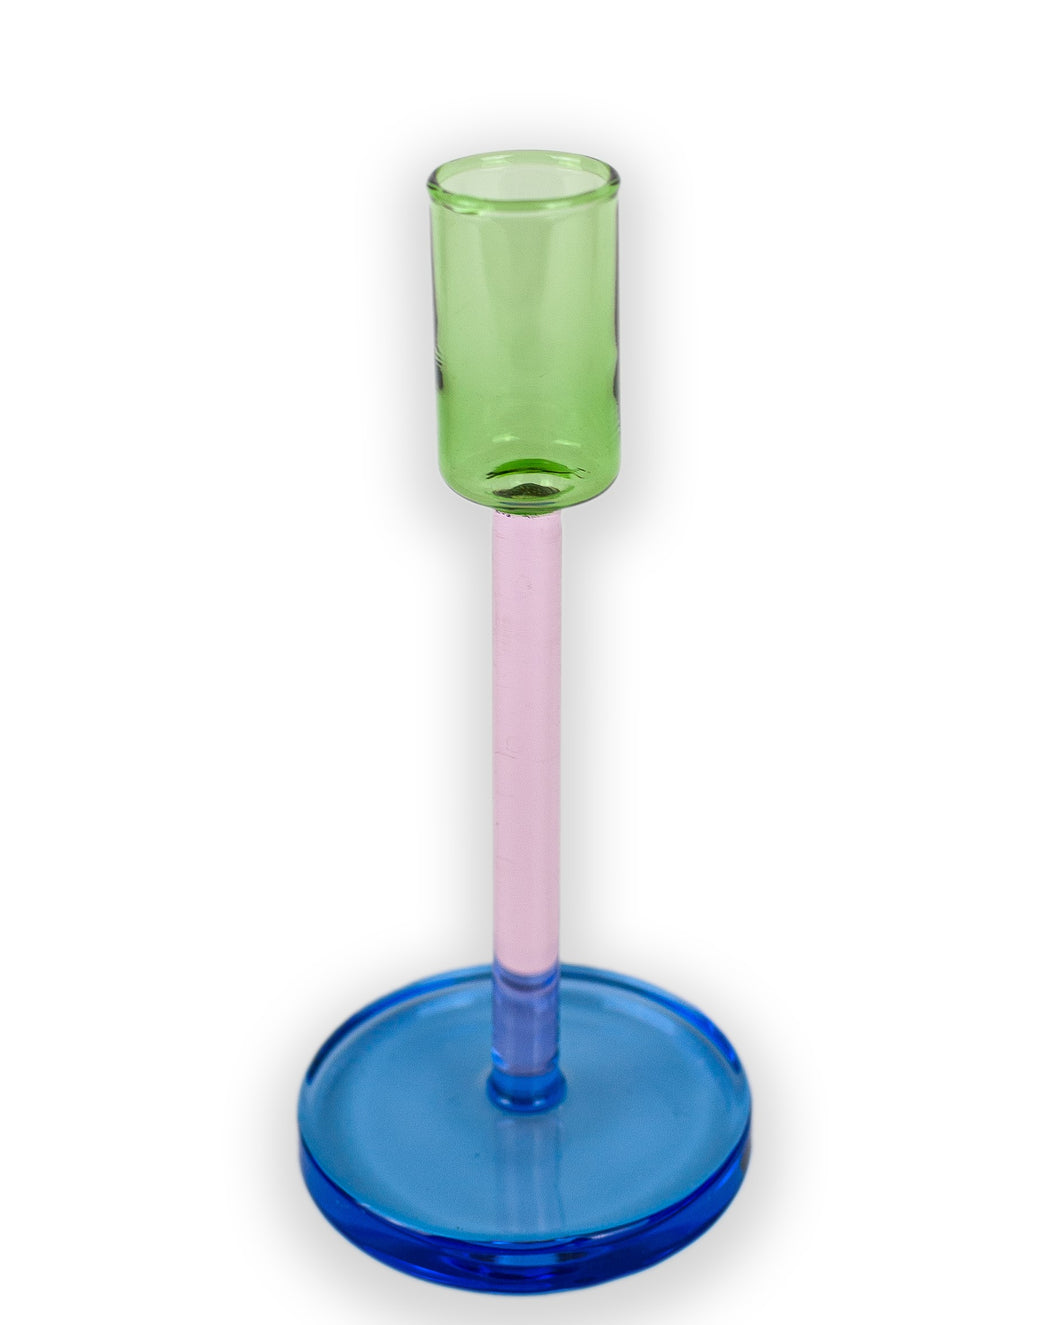 Block Design - Green, Pink and Blue Candlestick